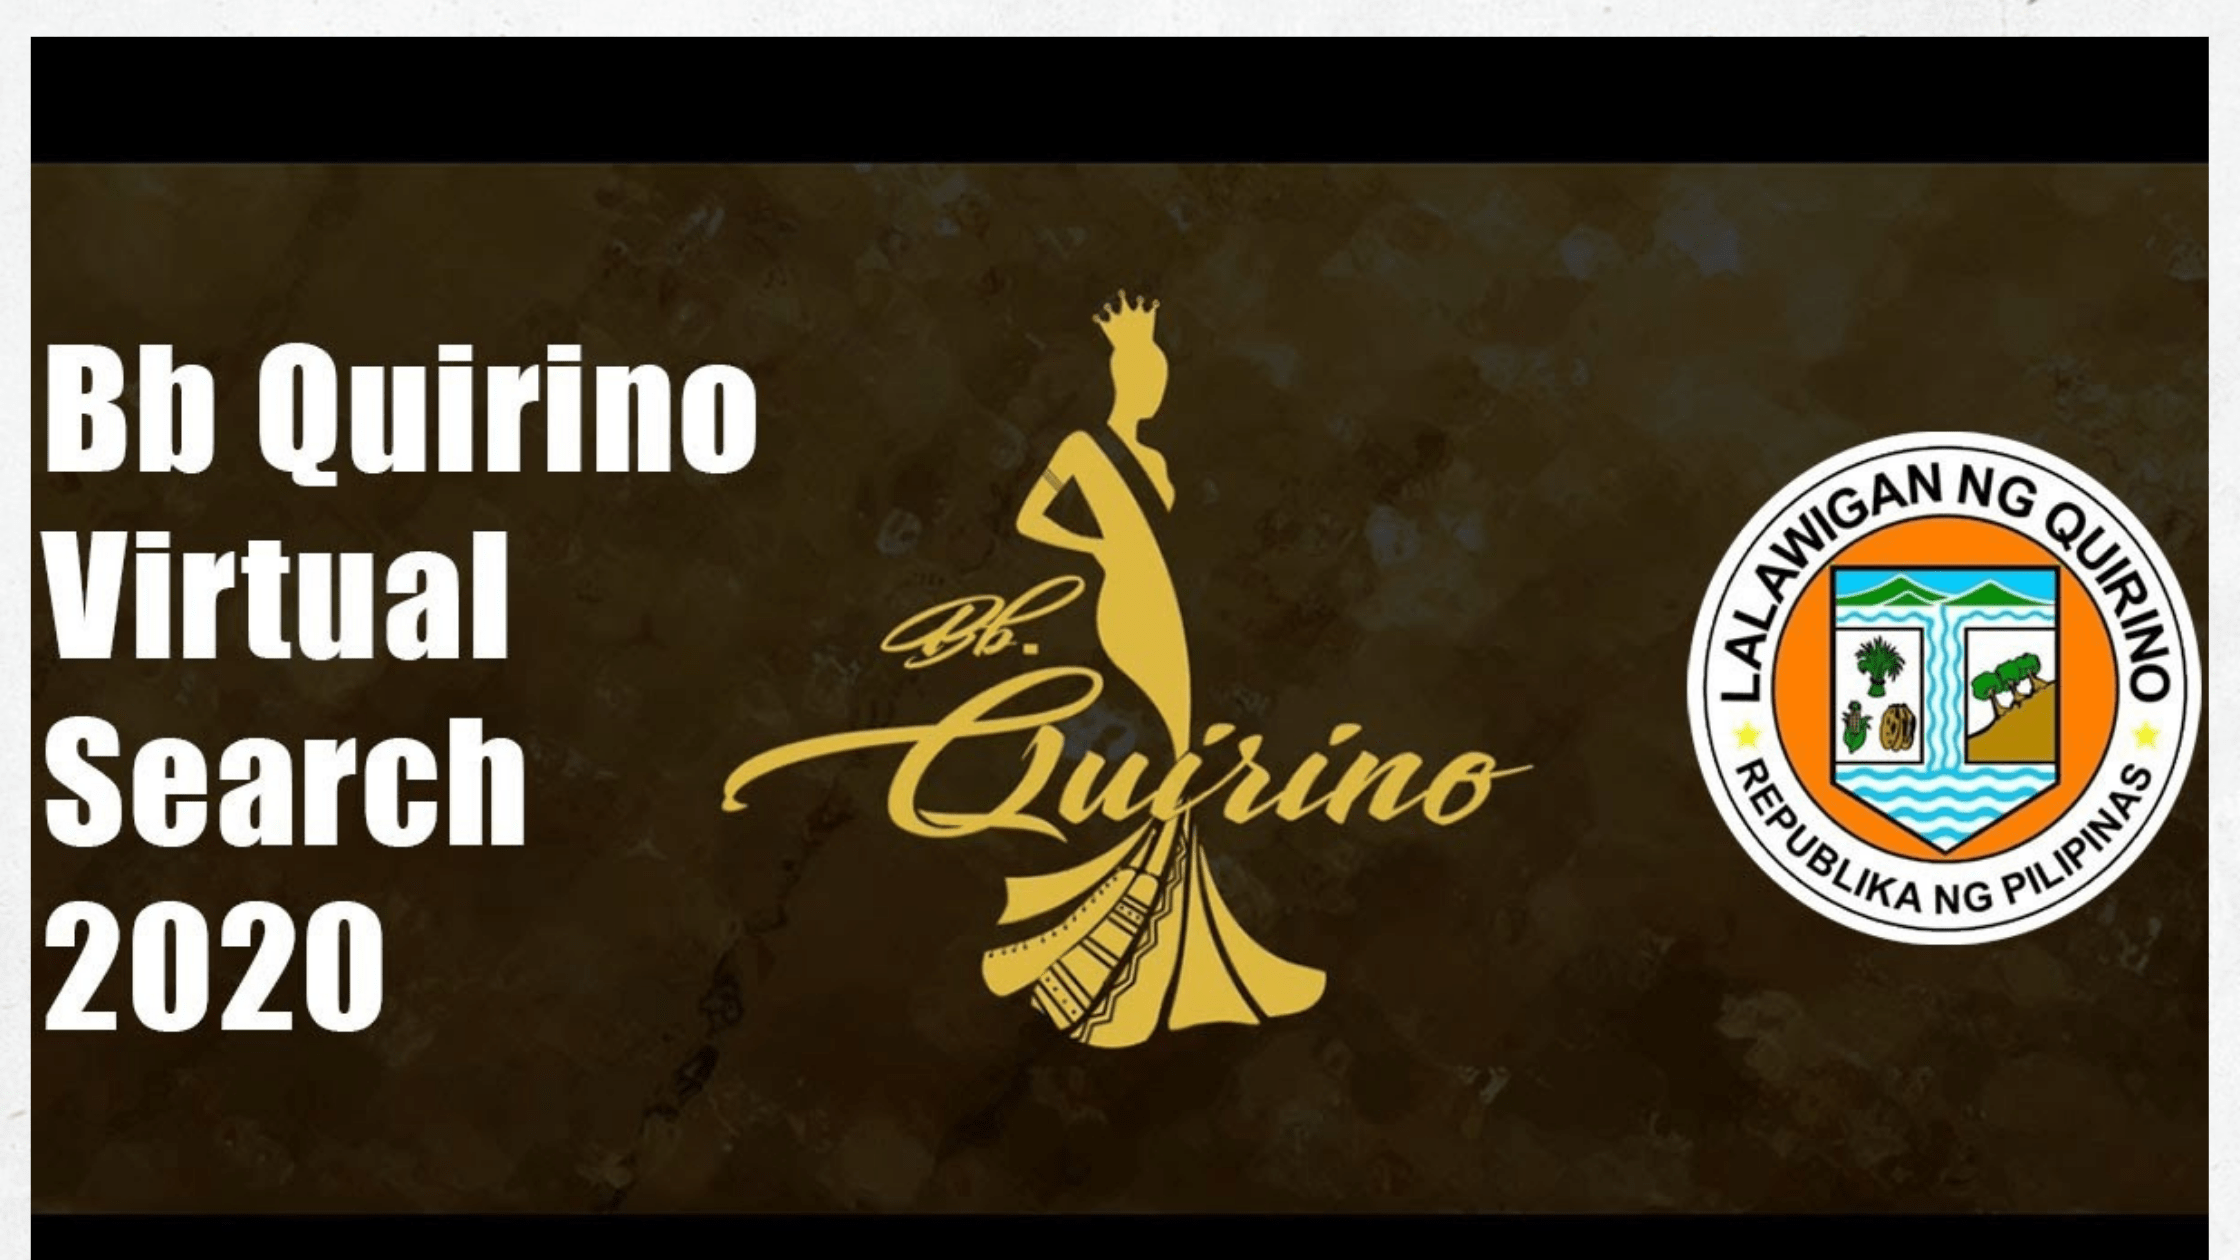 Virtual Search for Binibining Quirino 2020